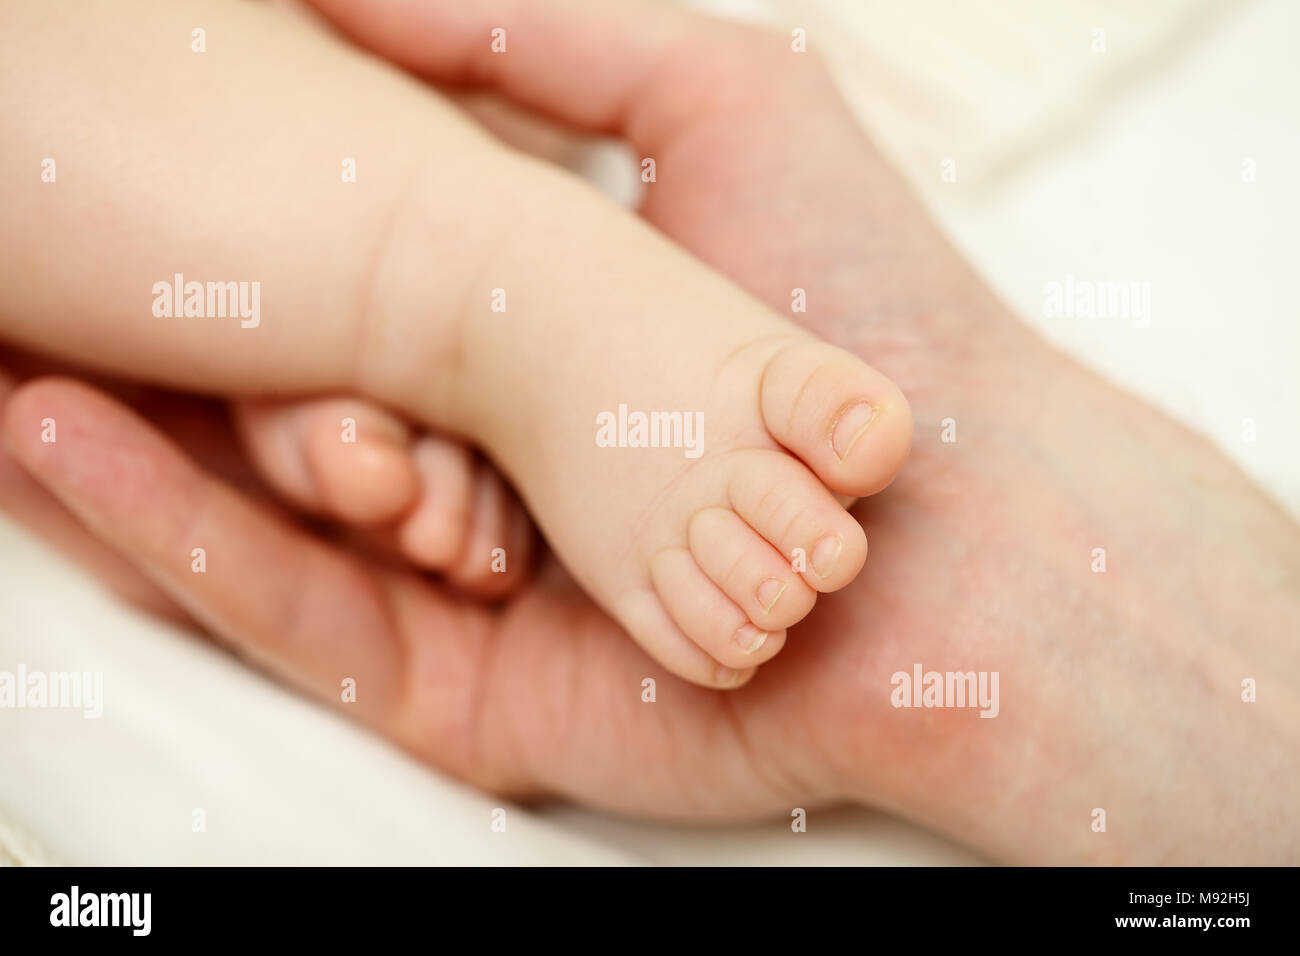 Little beautiful newborn baby foot in male hand Stock Photo